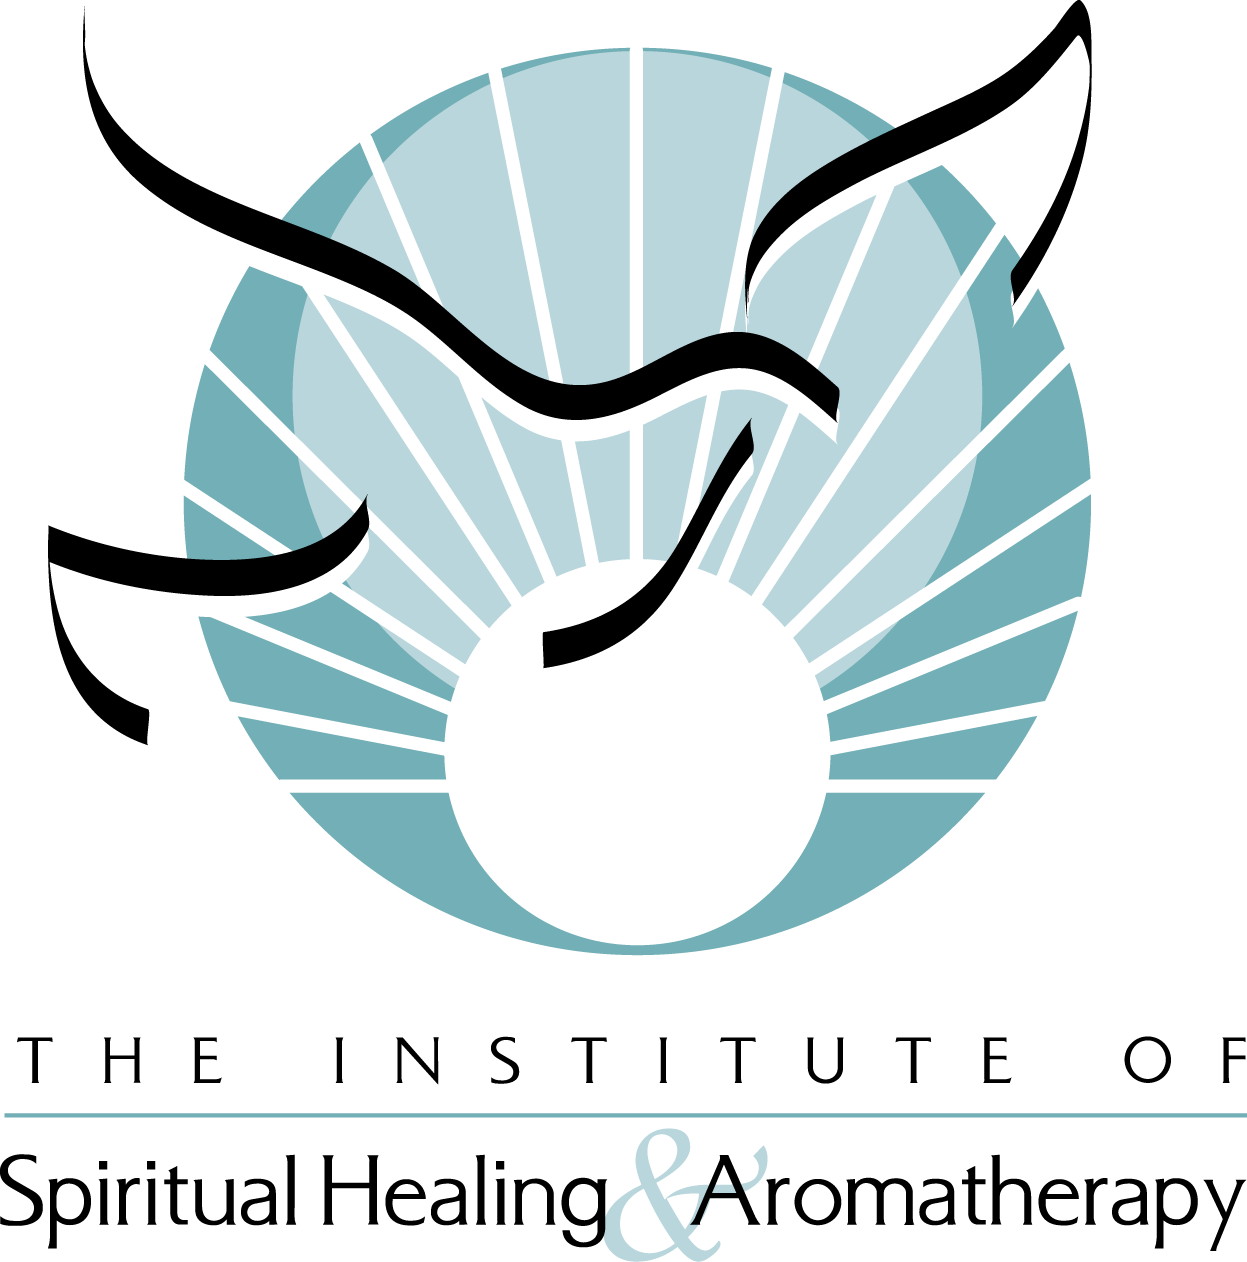 The Institute of Spiritual Healing and Aromatherapy (ISHA)